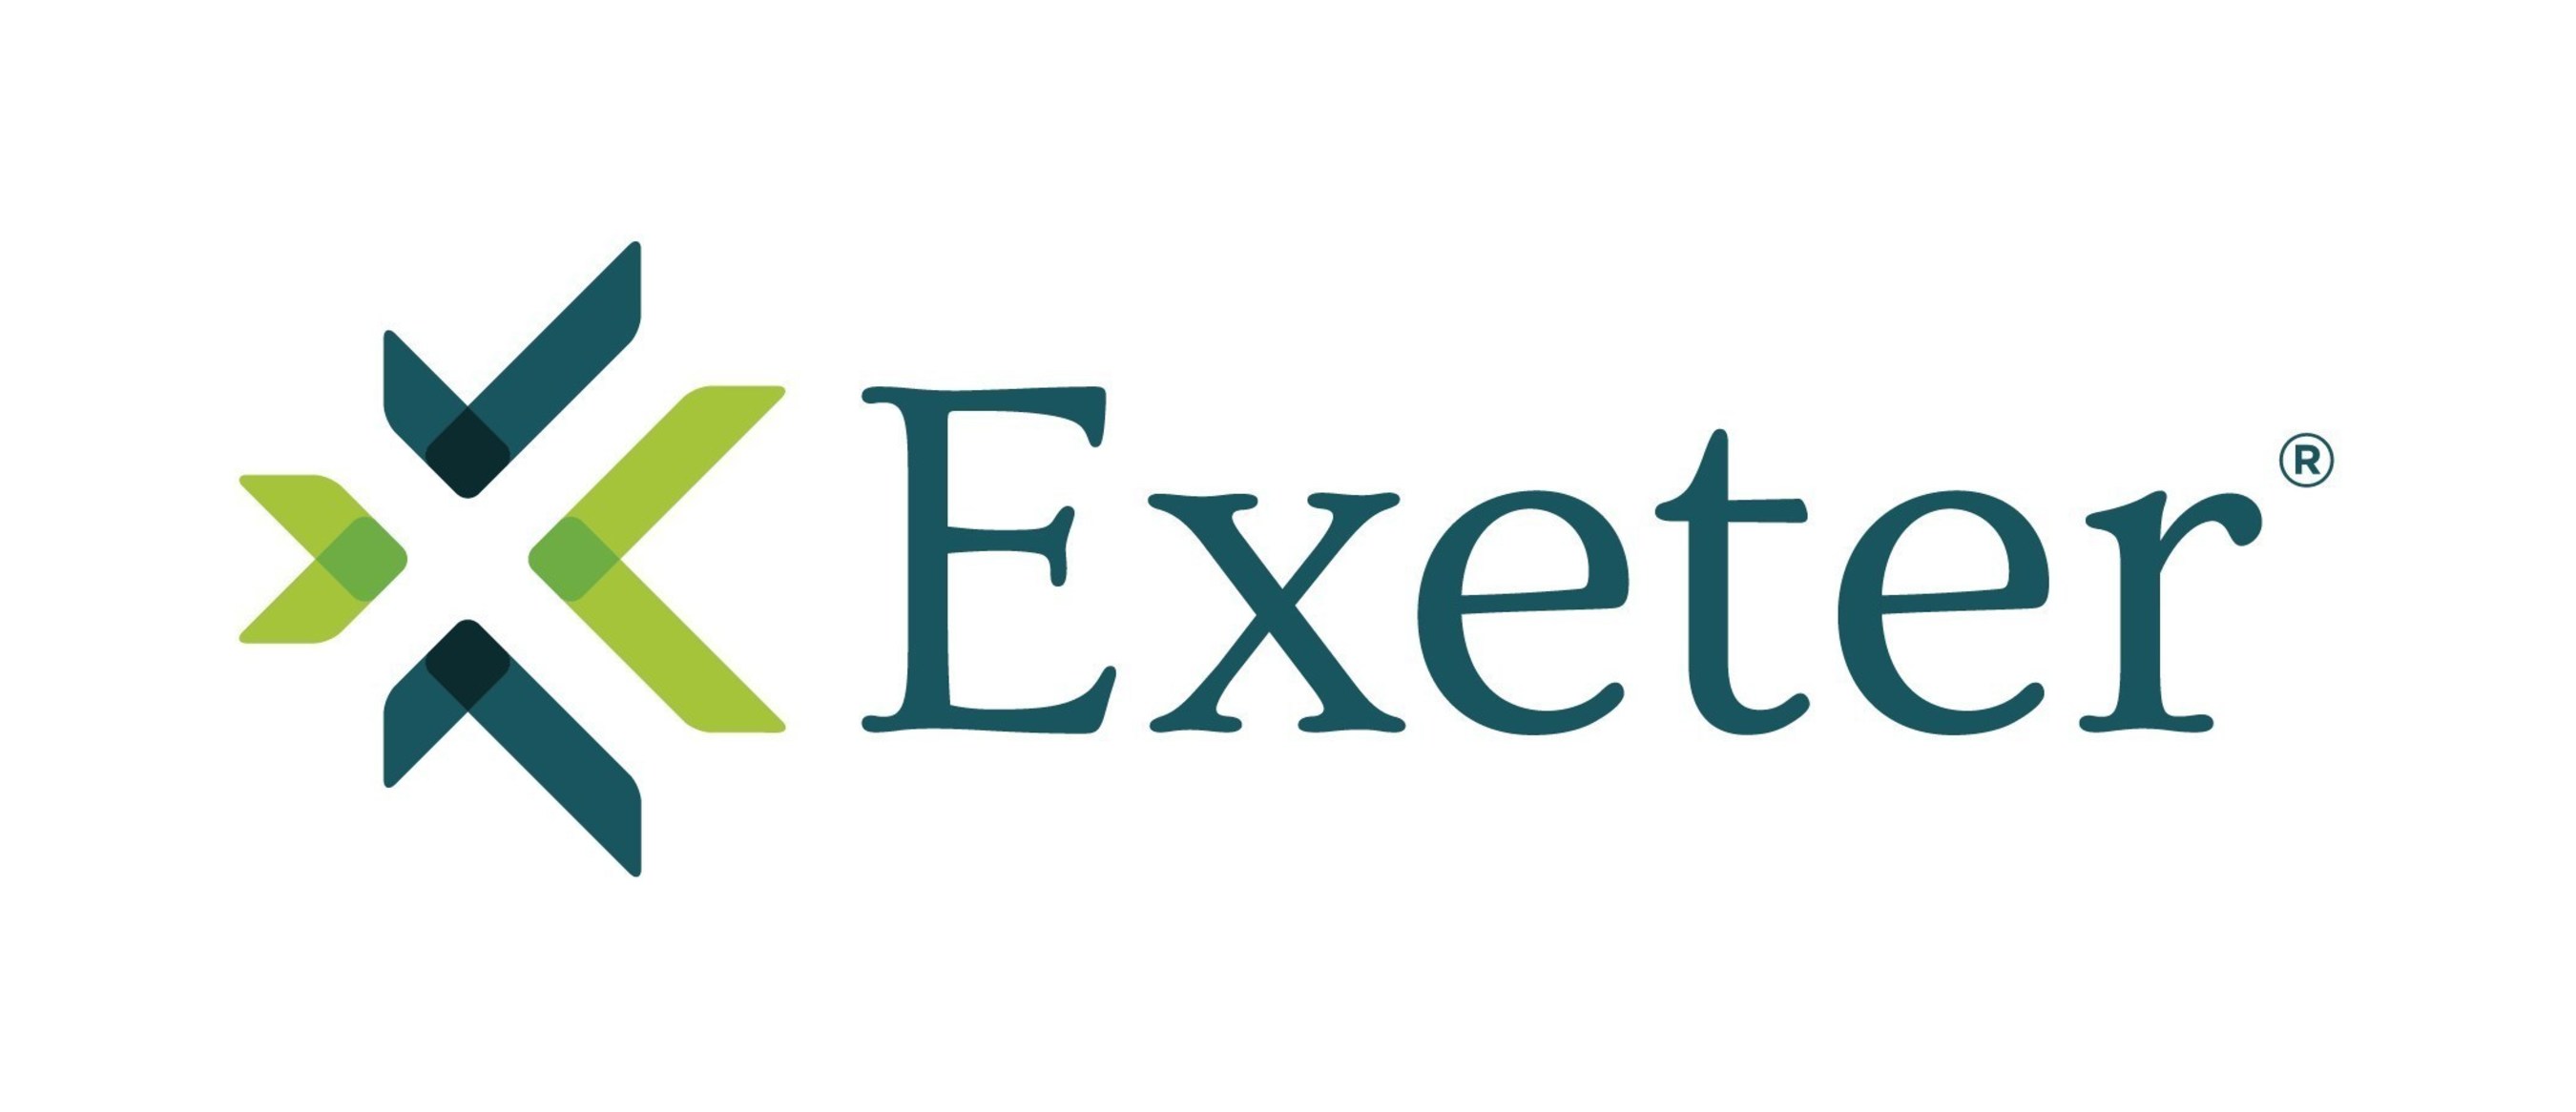 New Exeter Finance Corp. company logo